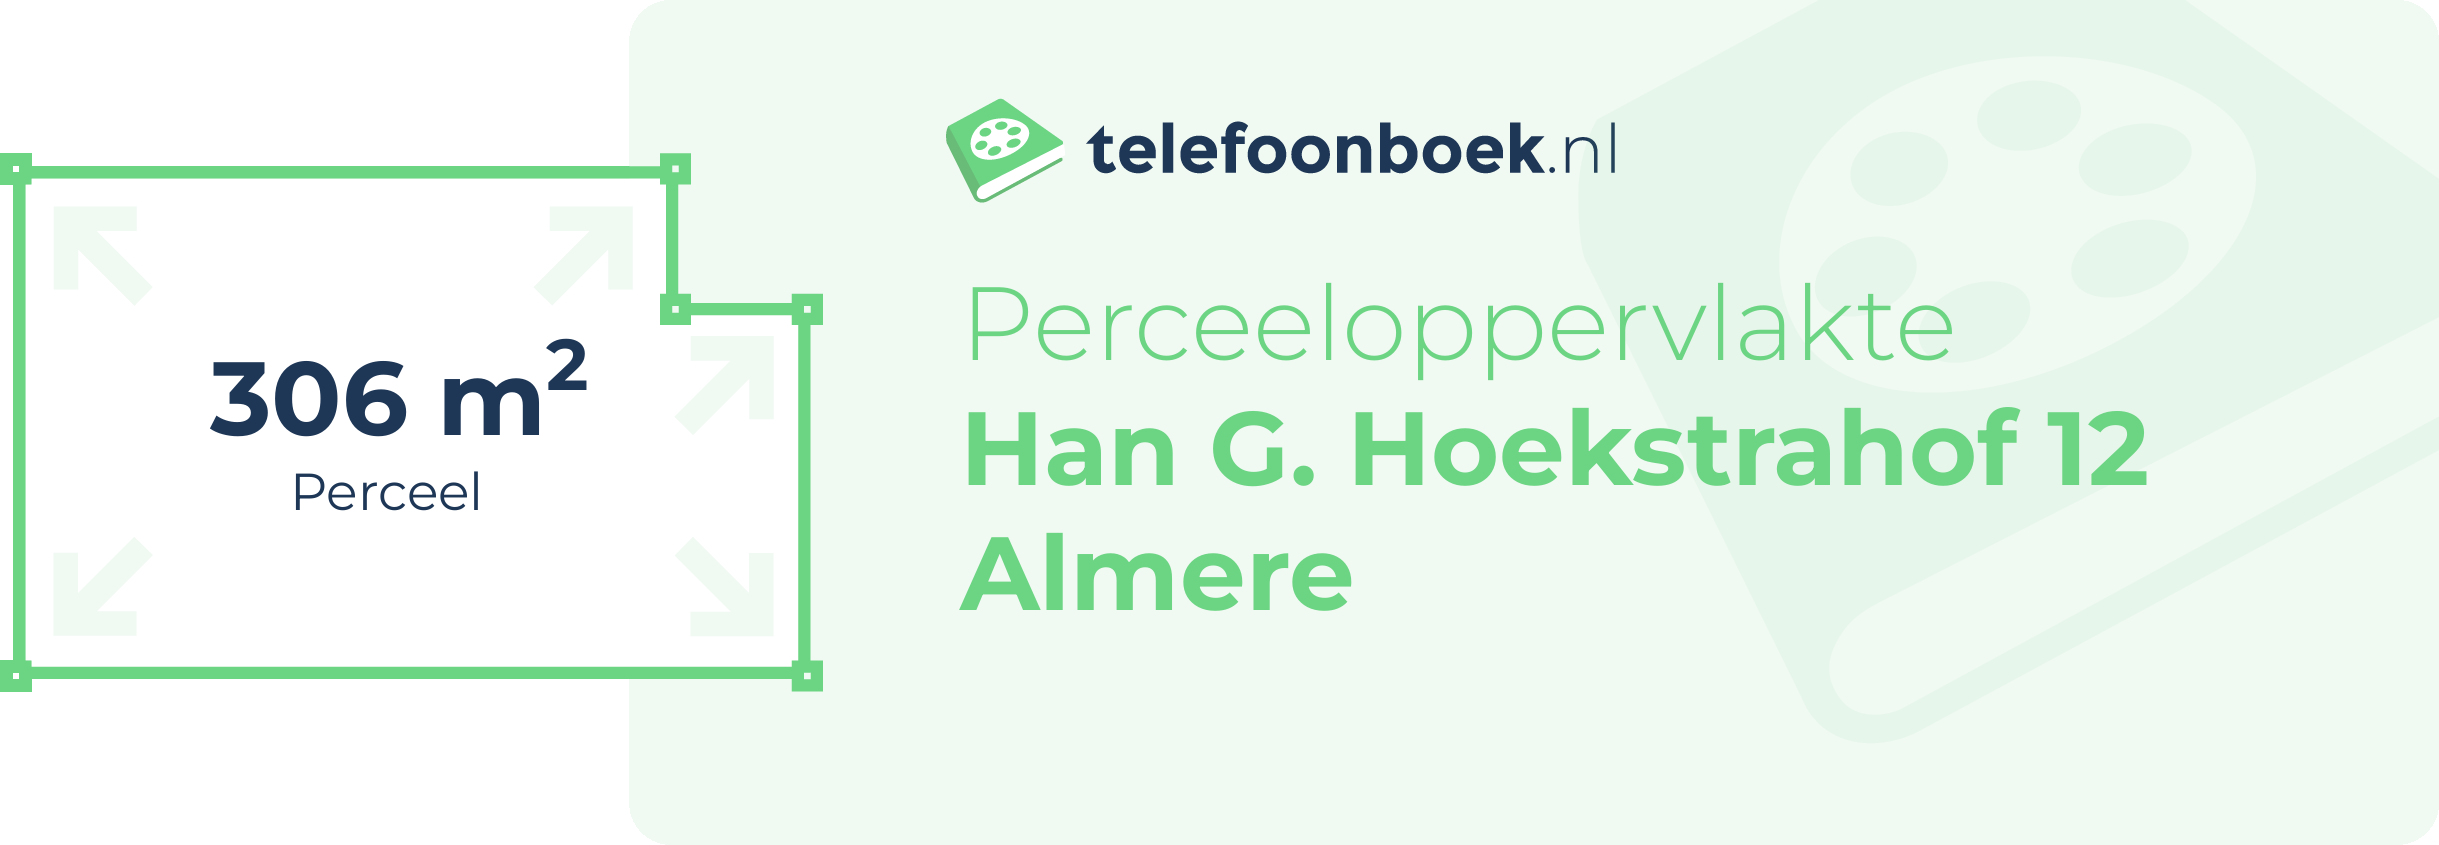 Perceeloppervlakte Han G. Hoekstrahof 12 Almere